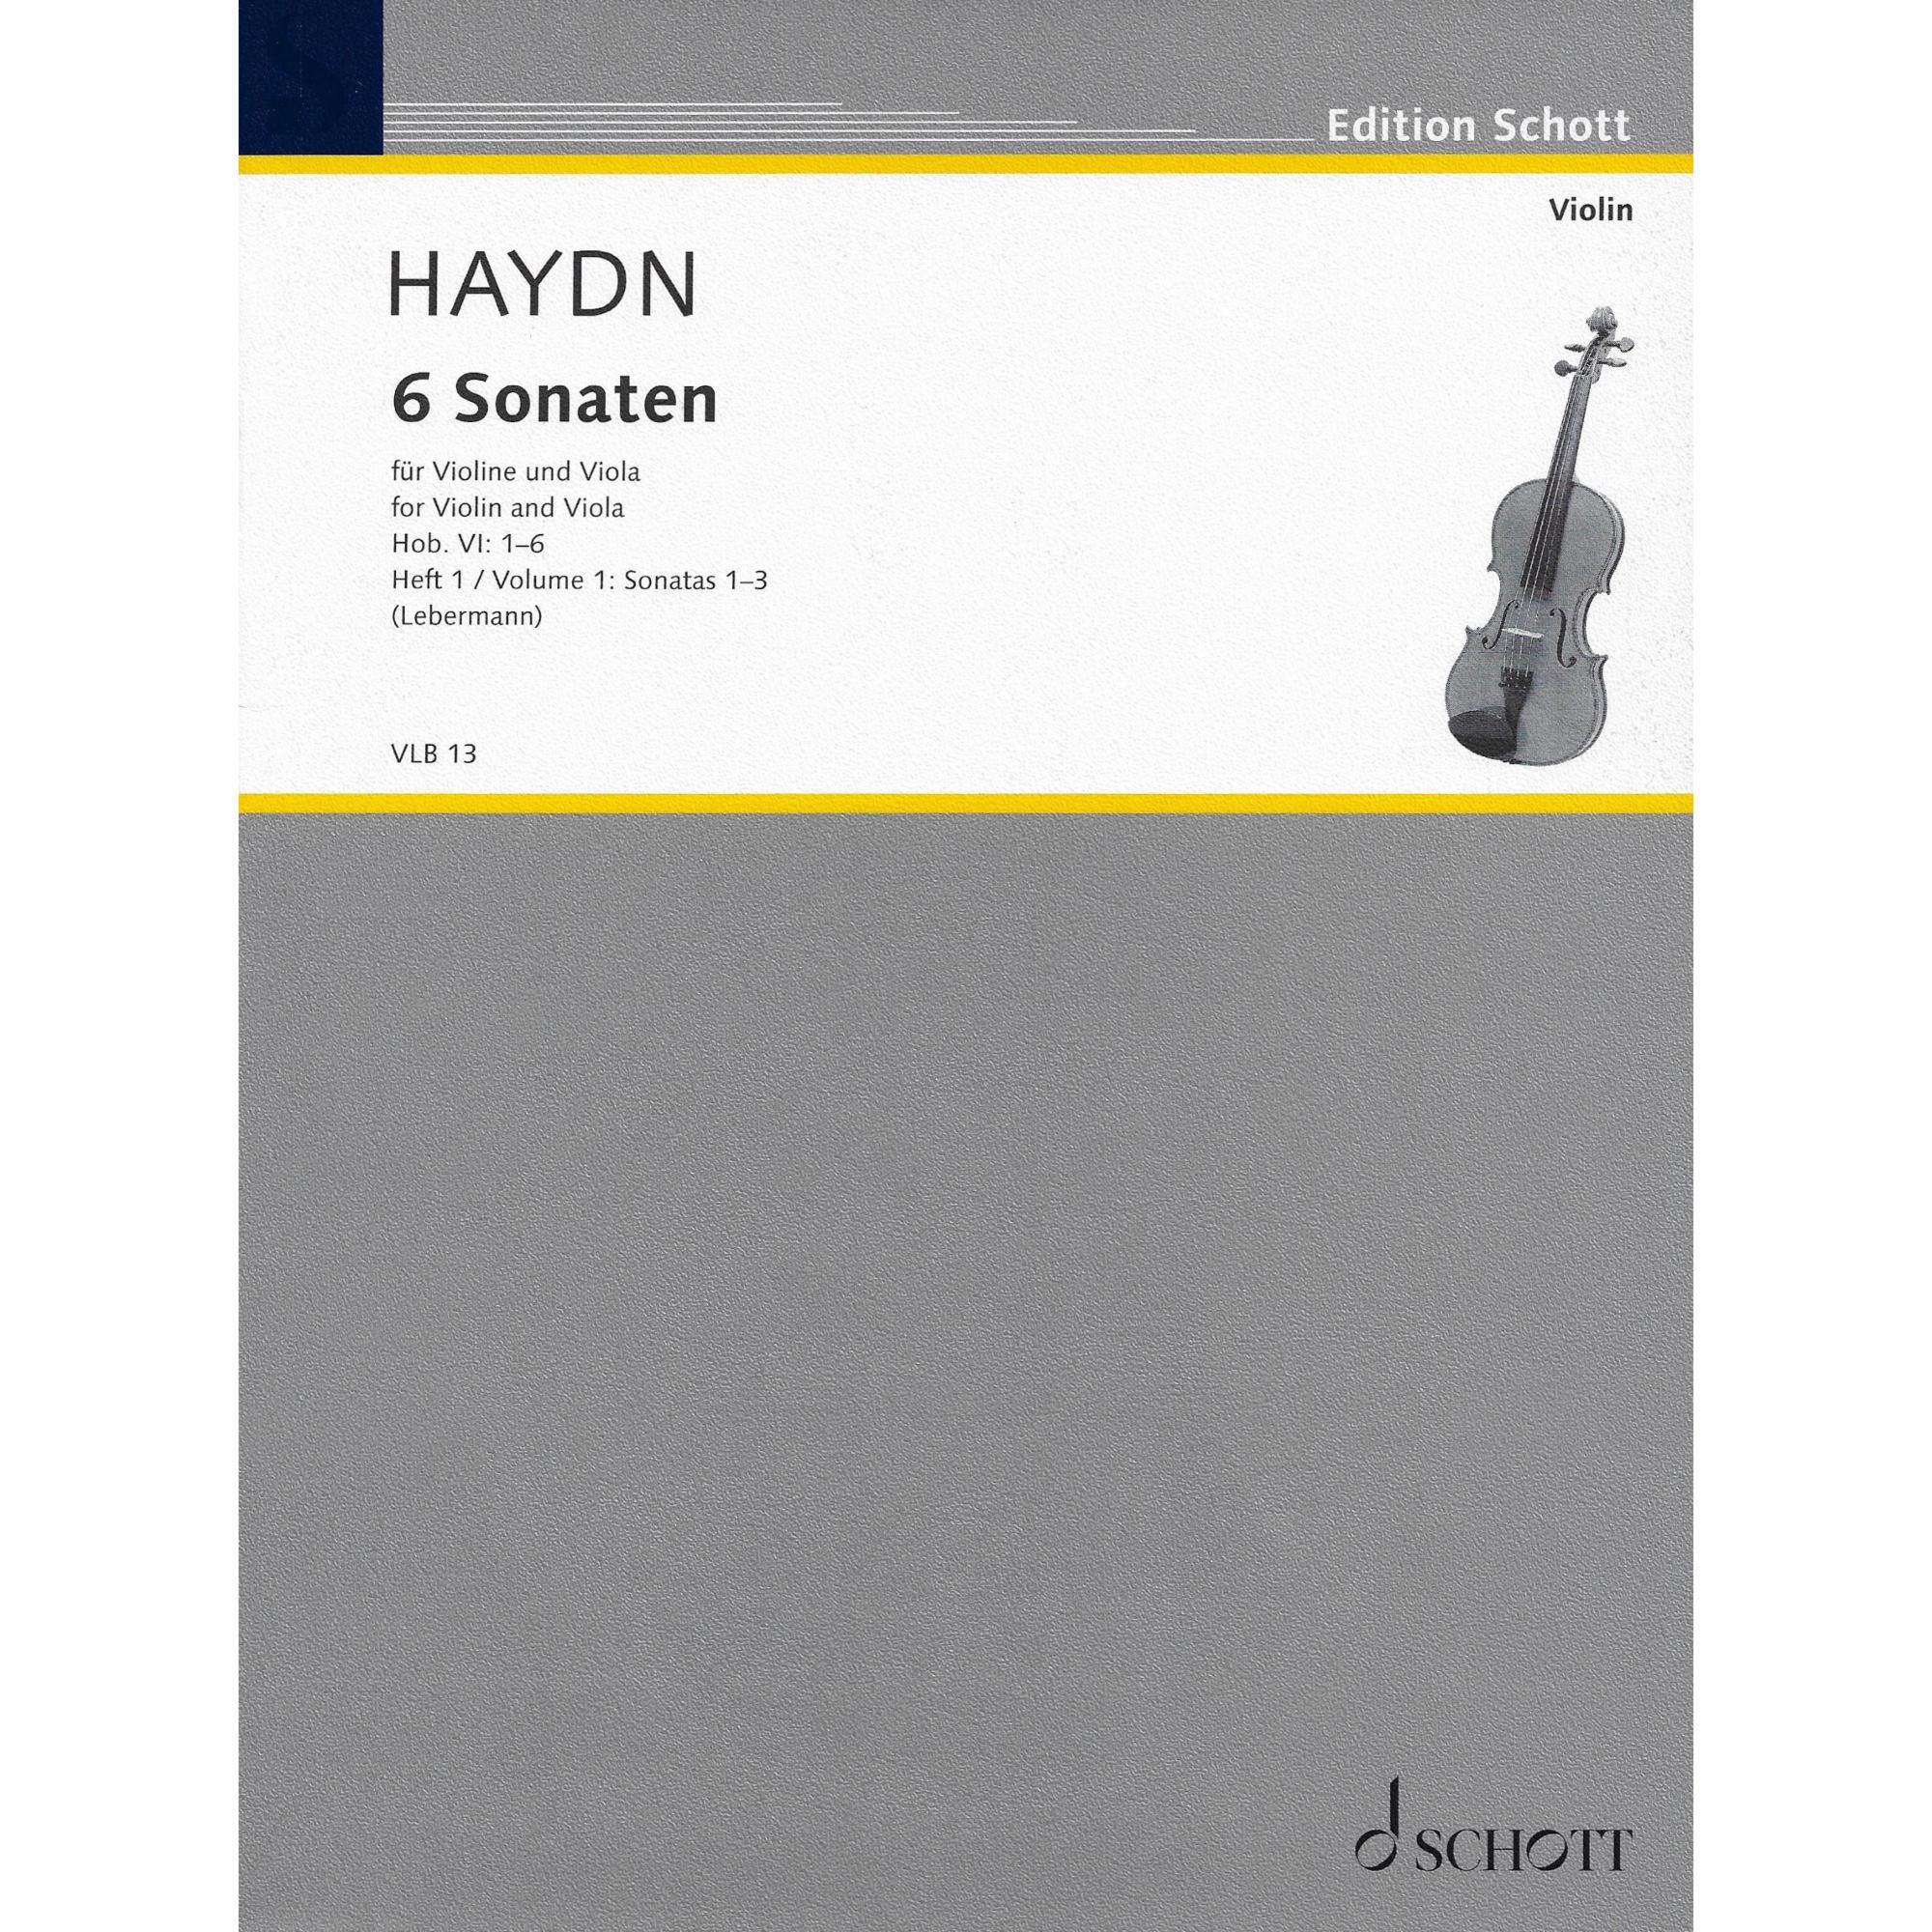 Haydn -- 6 Sonatas, Hob. VI: 1-6 for Violin and Viola